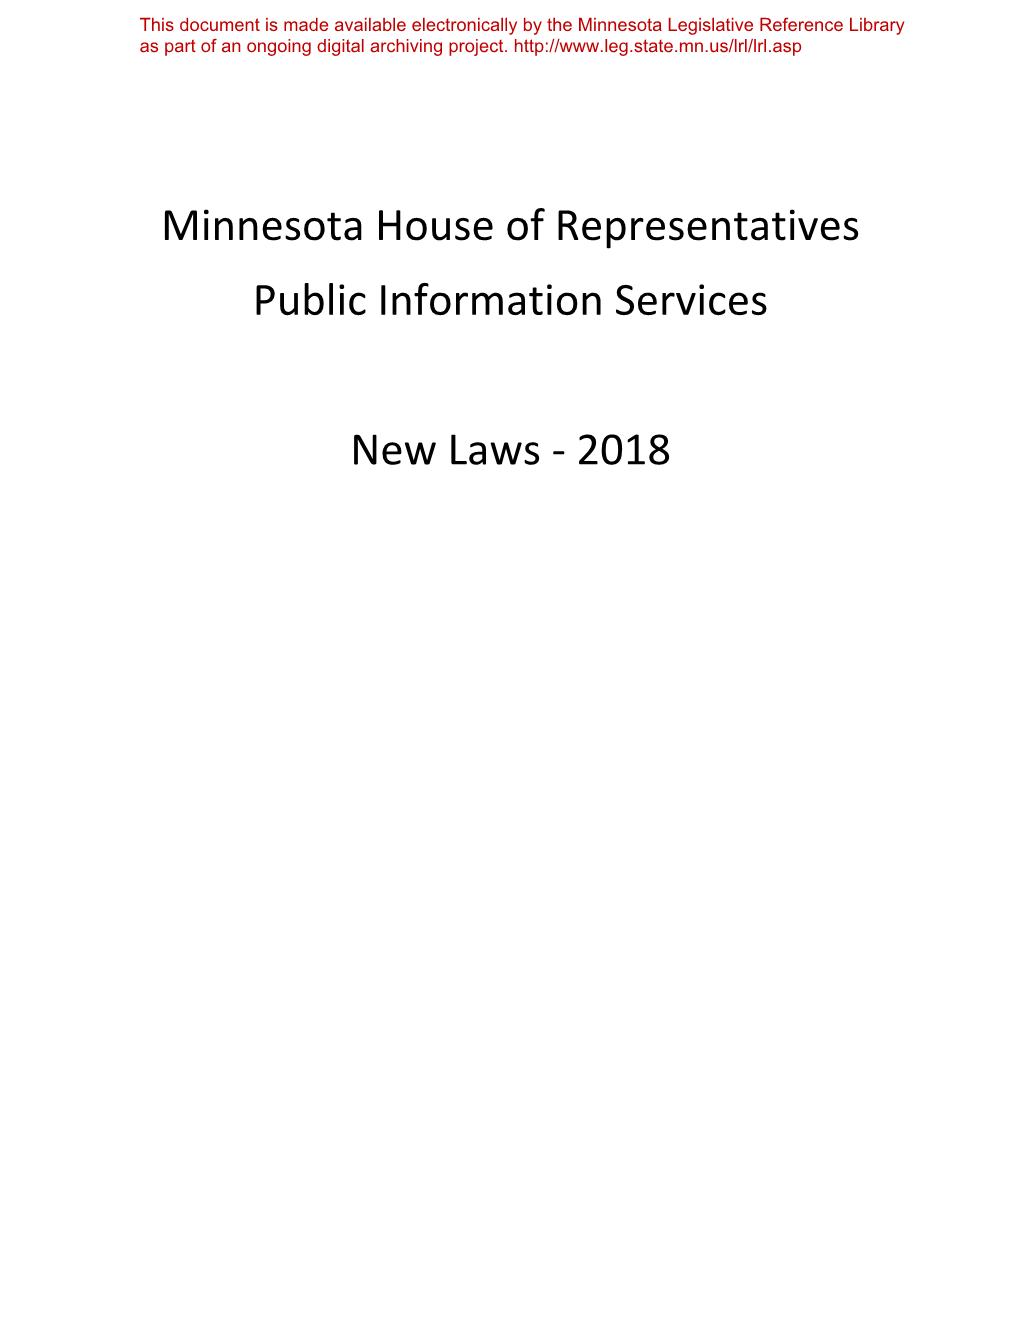 Minnesota House of Representatives: New Laws 2018